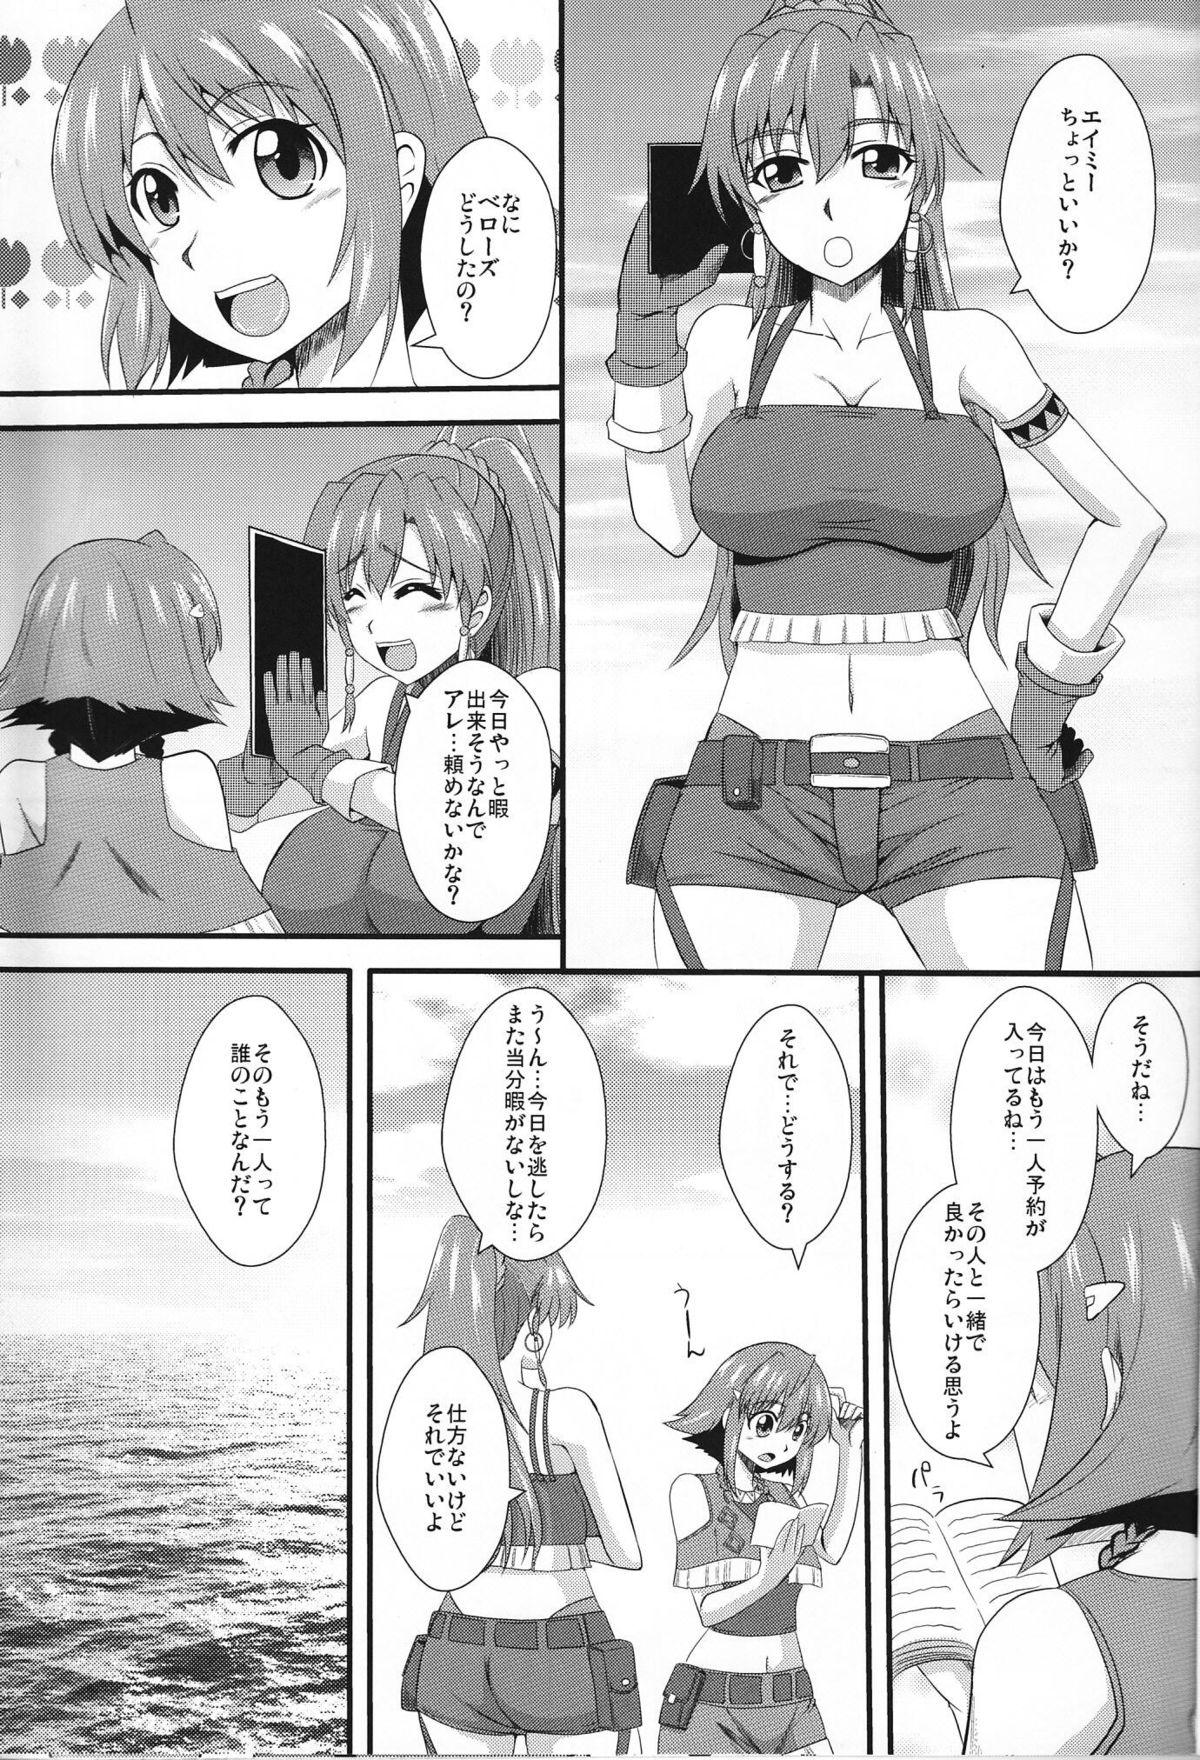 Young Shoukan no Gargantia - Suisei no gargantia Boquete - Page 2